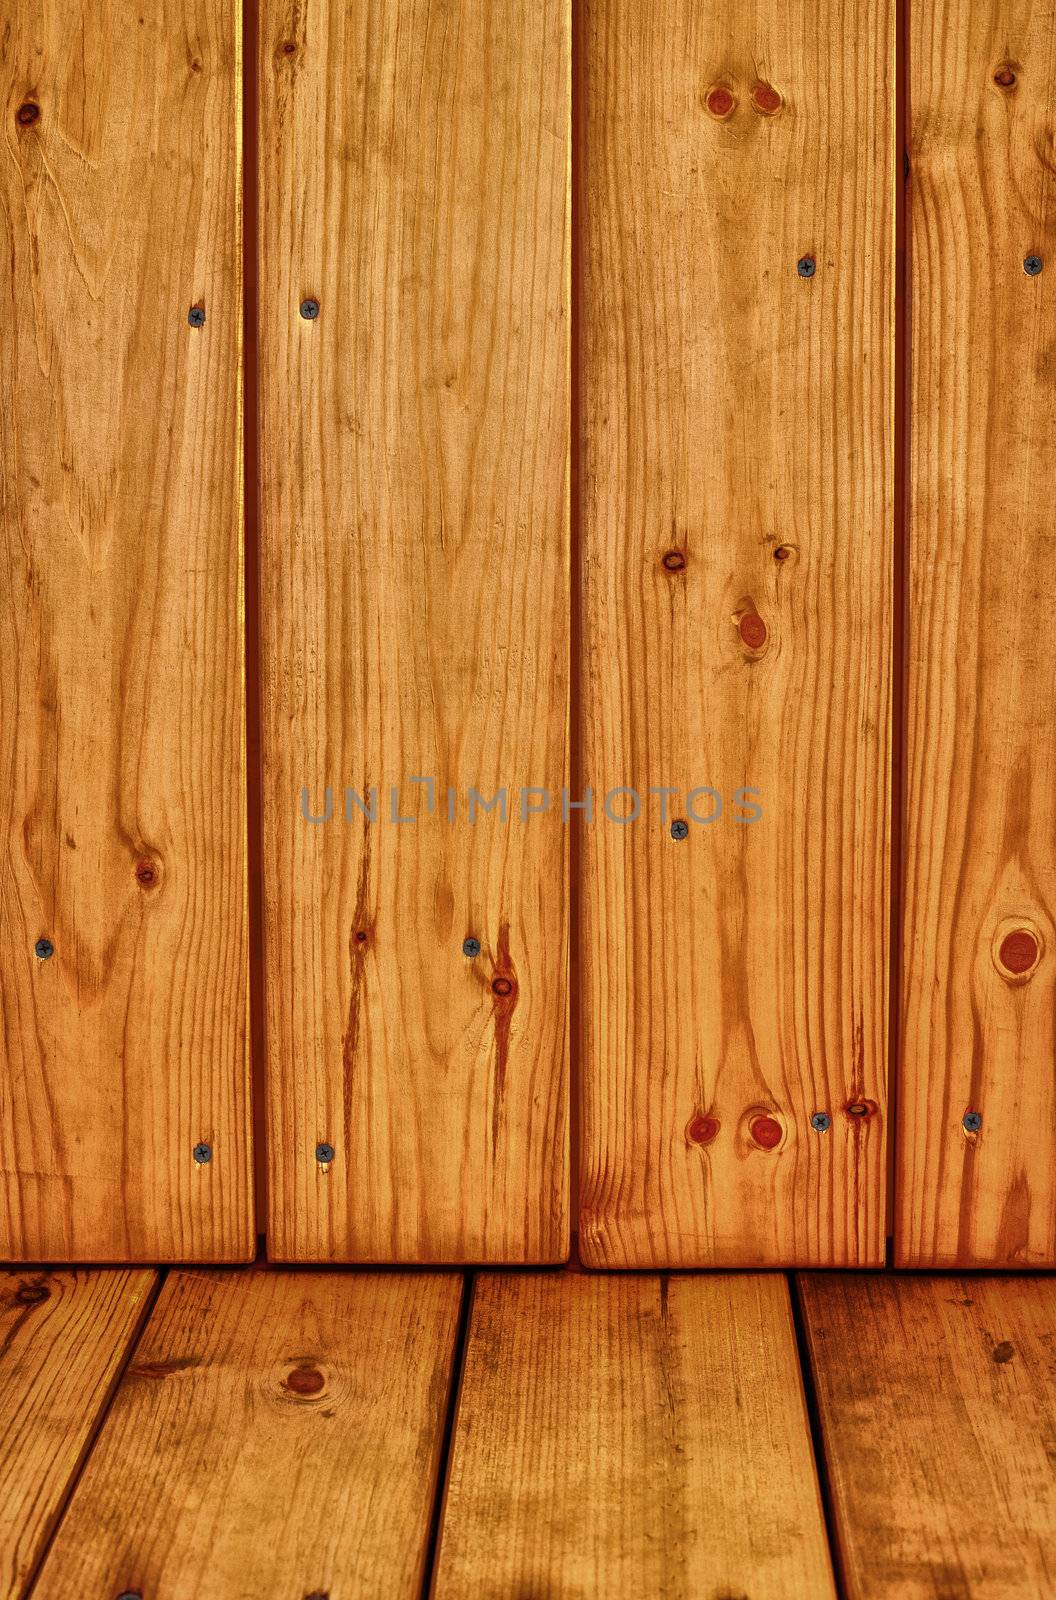 Brown pine wooden background with floor